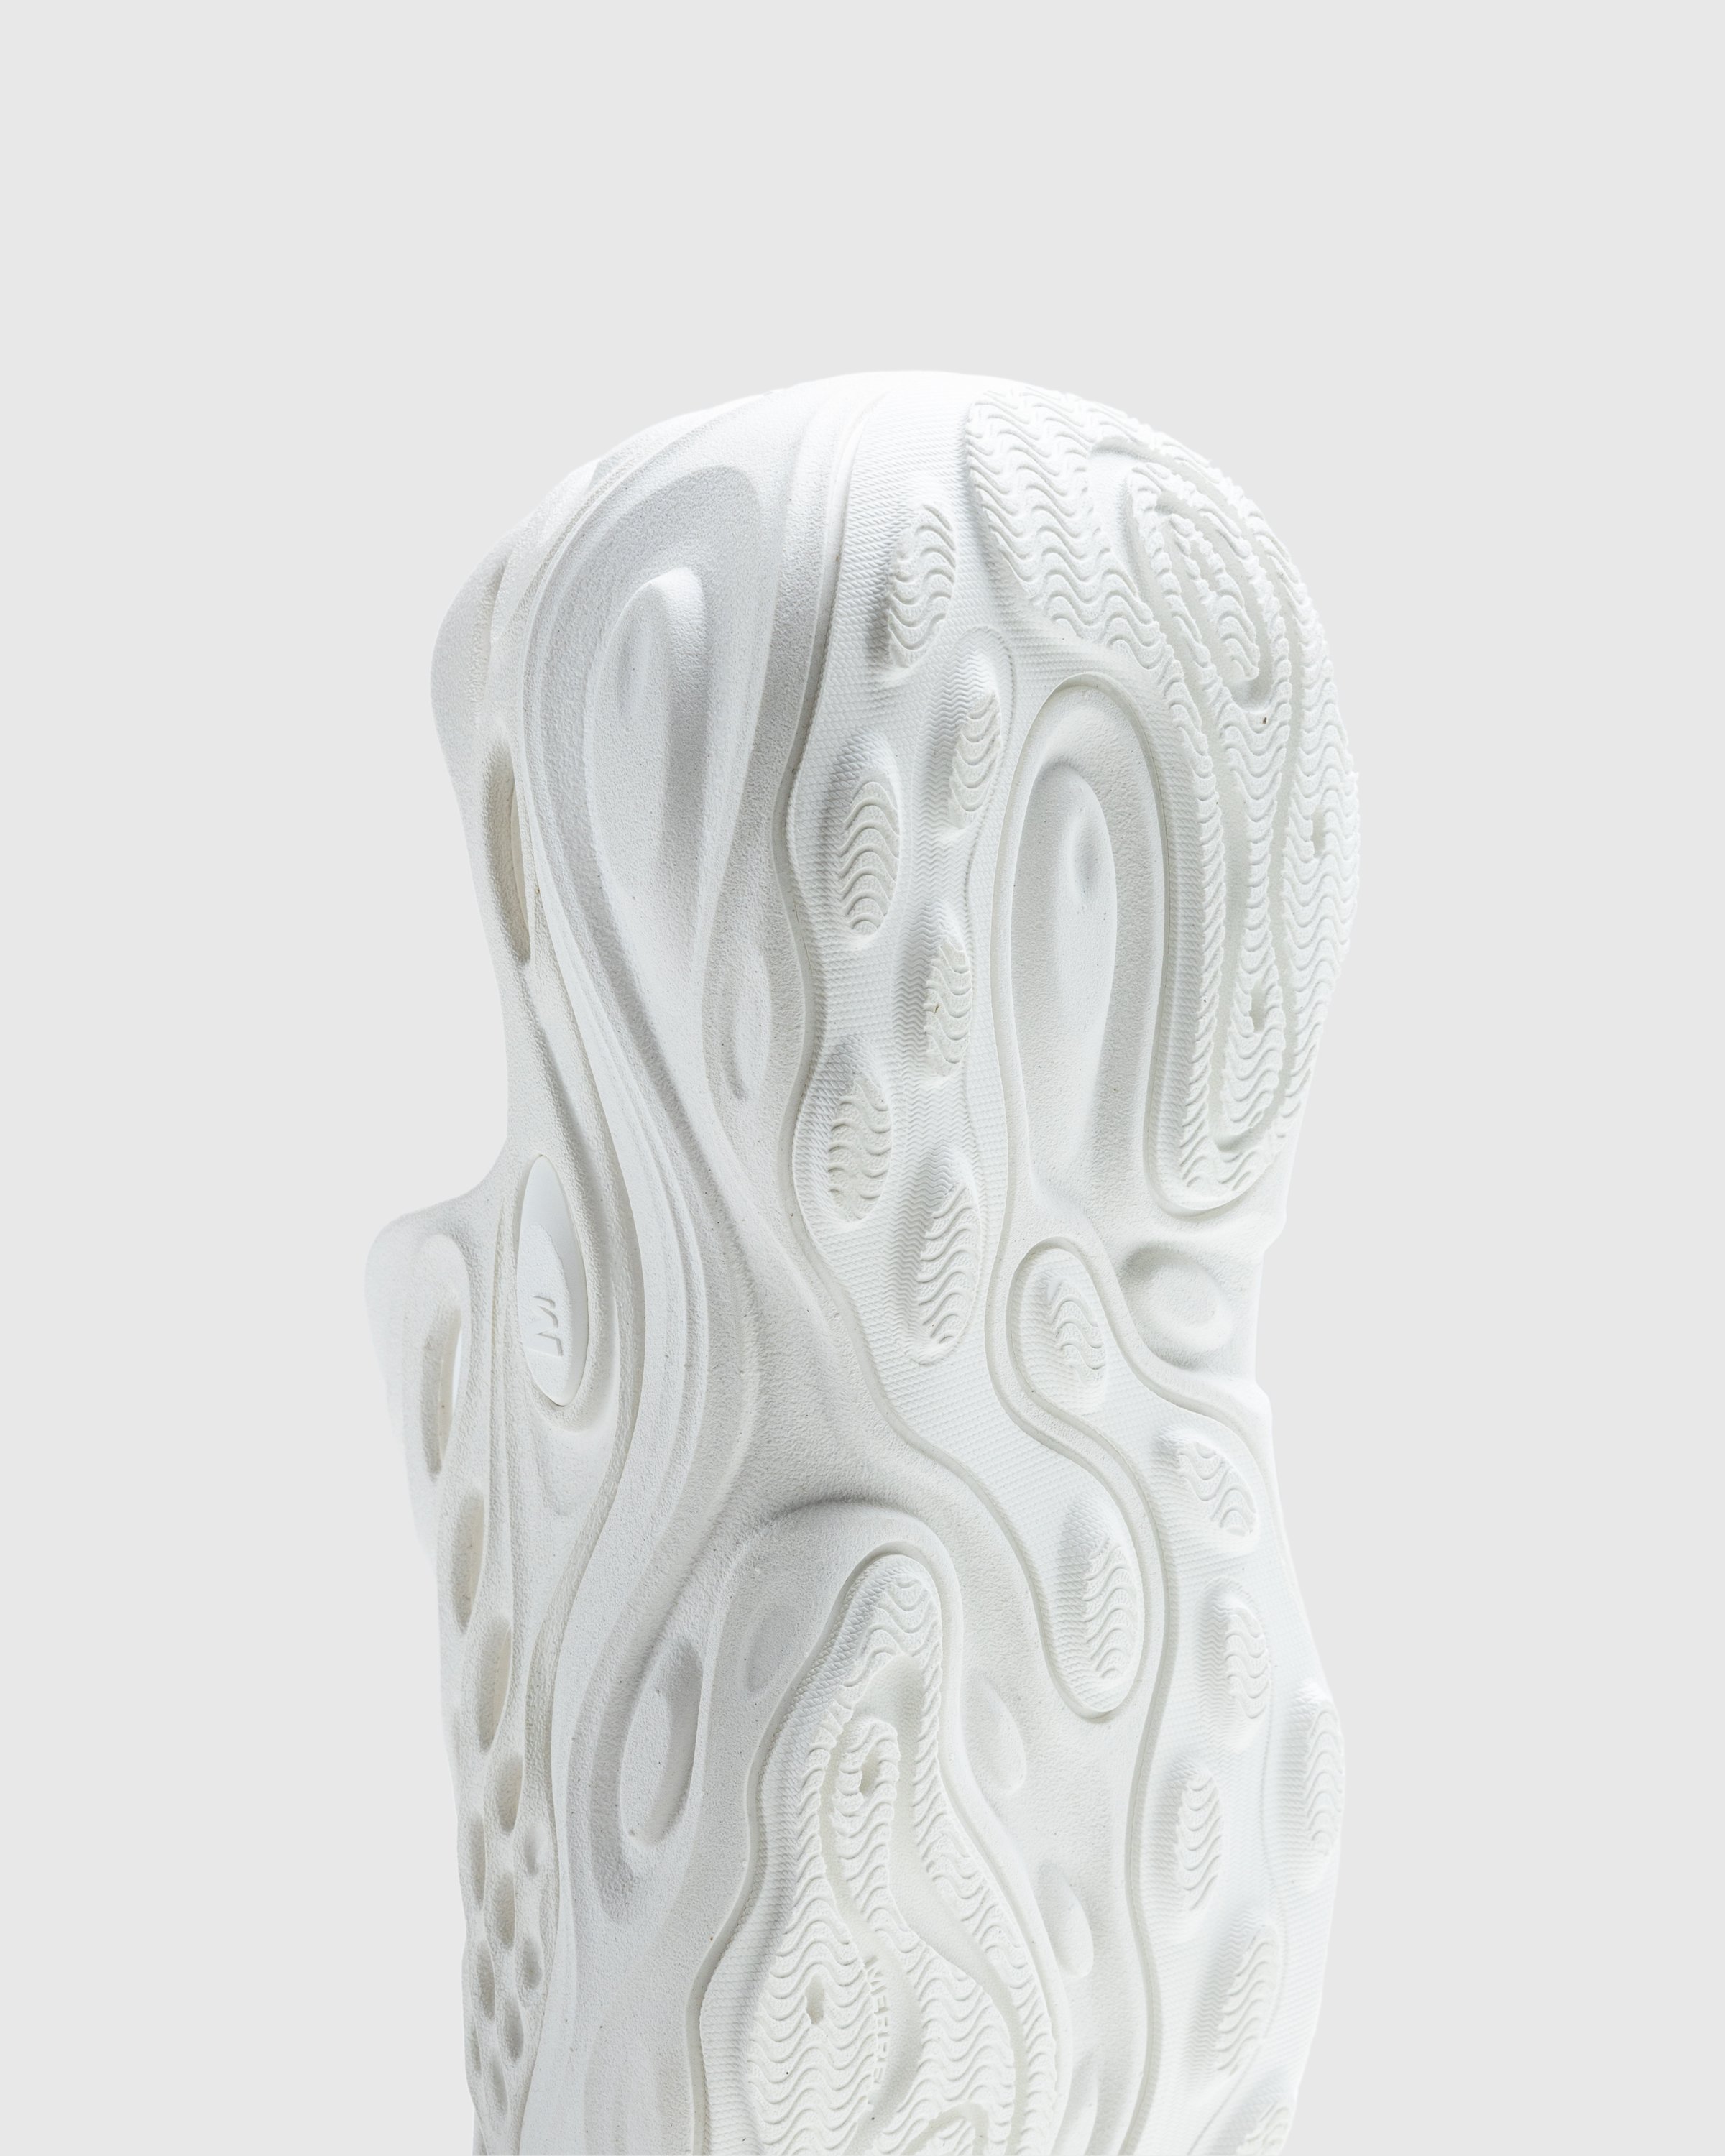 Merrell - HYDRO NEXT GEN MOC SE/TRIPLE WHITE - Footwear - White - Image 5